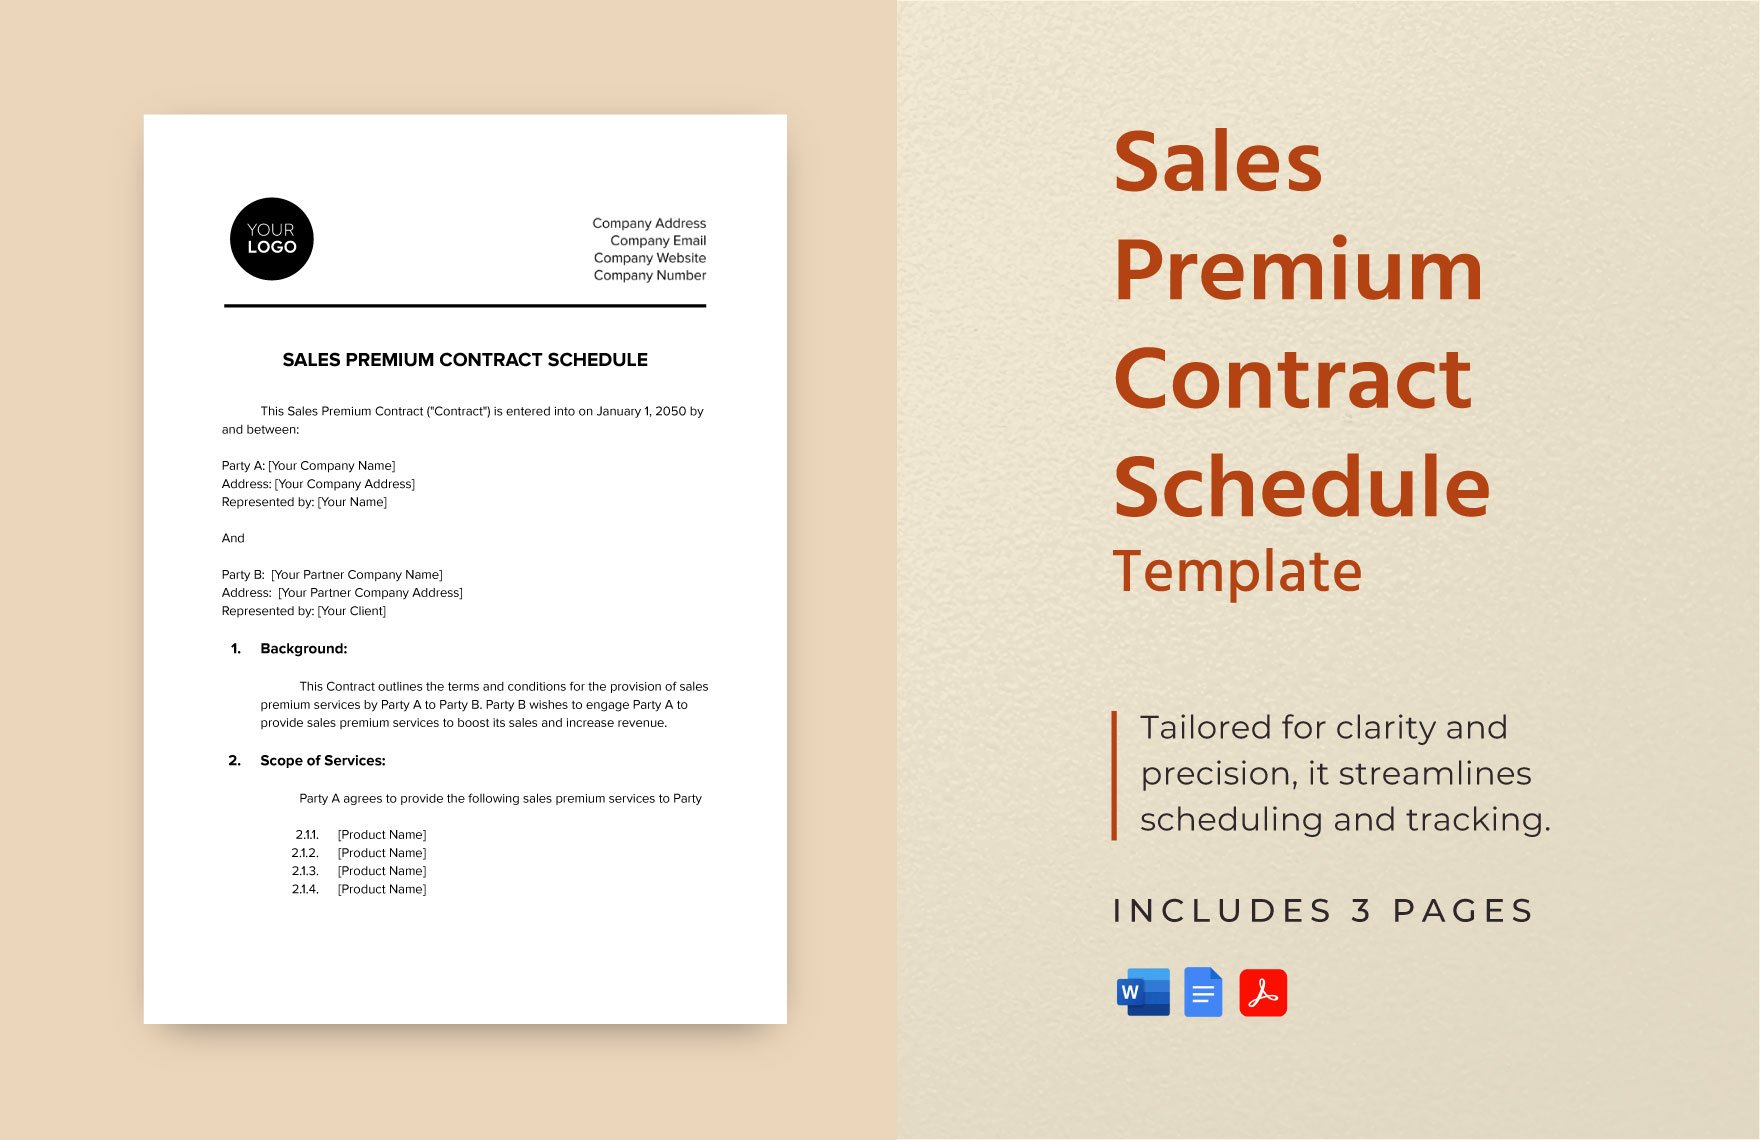 Sales Premium Contract Schedule Template in Word, Google Docs, PDF